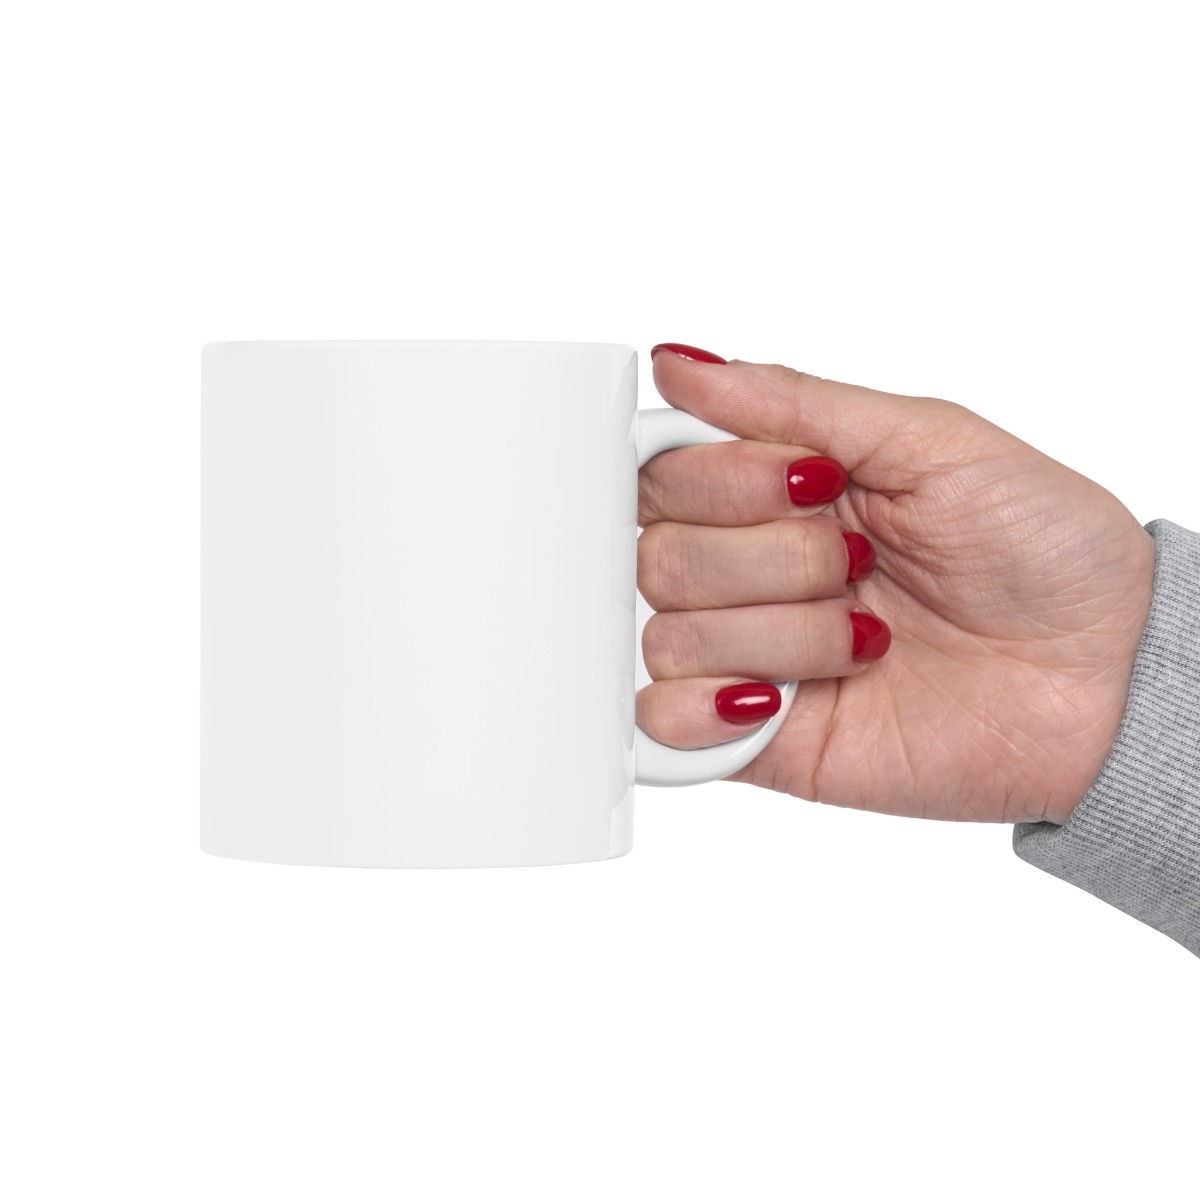 Proud Teacher - 11oz White Coffee Mug for Teachers product thumbnail image